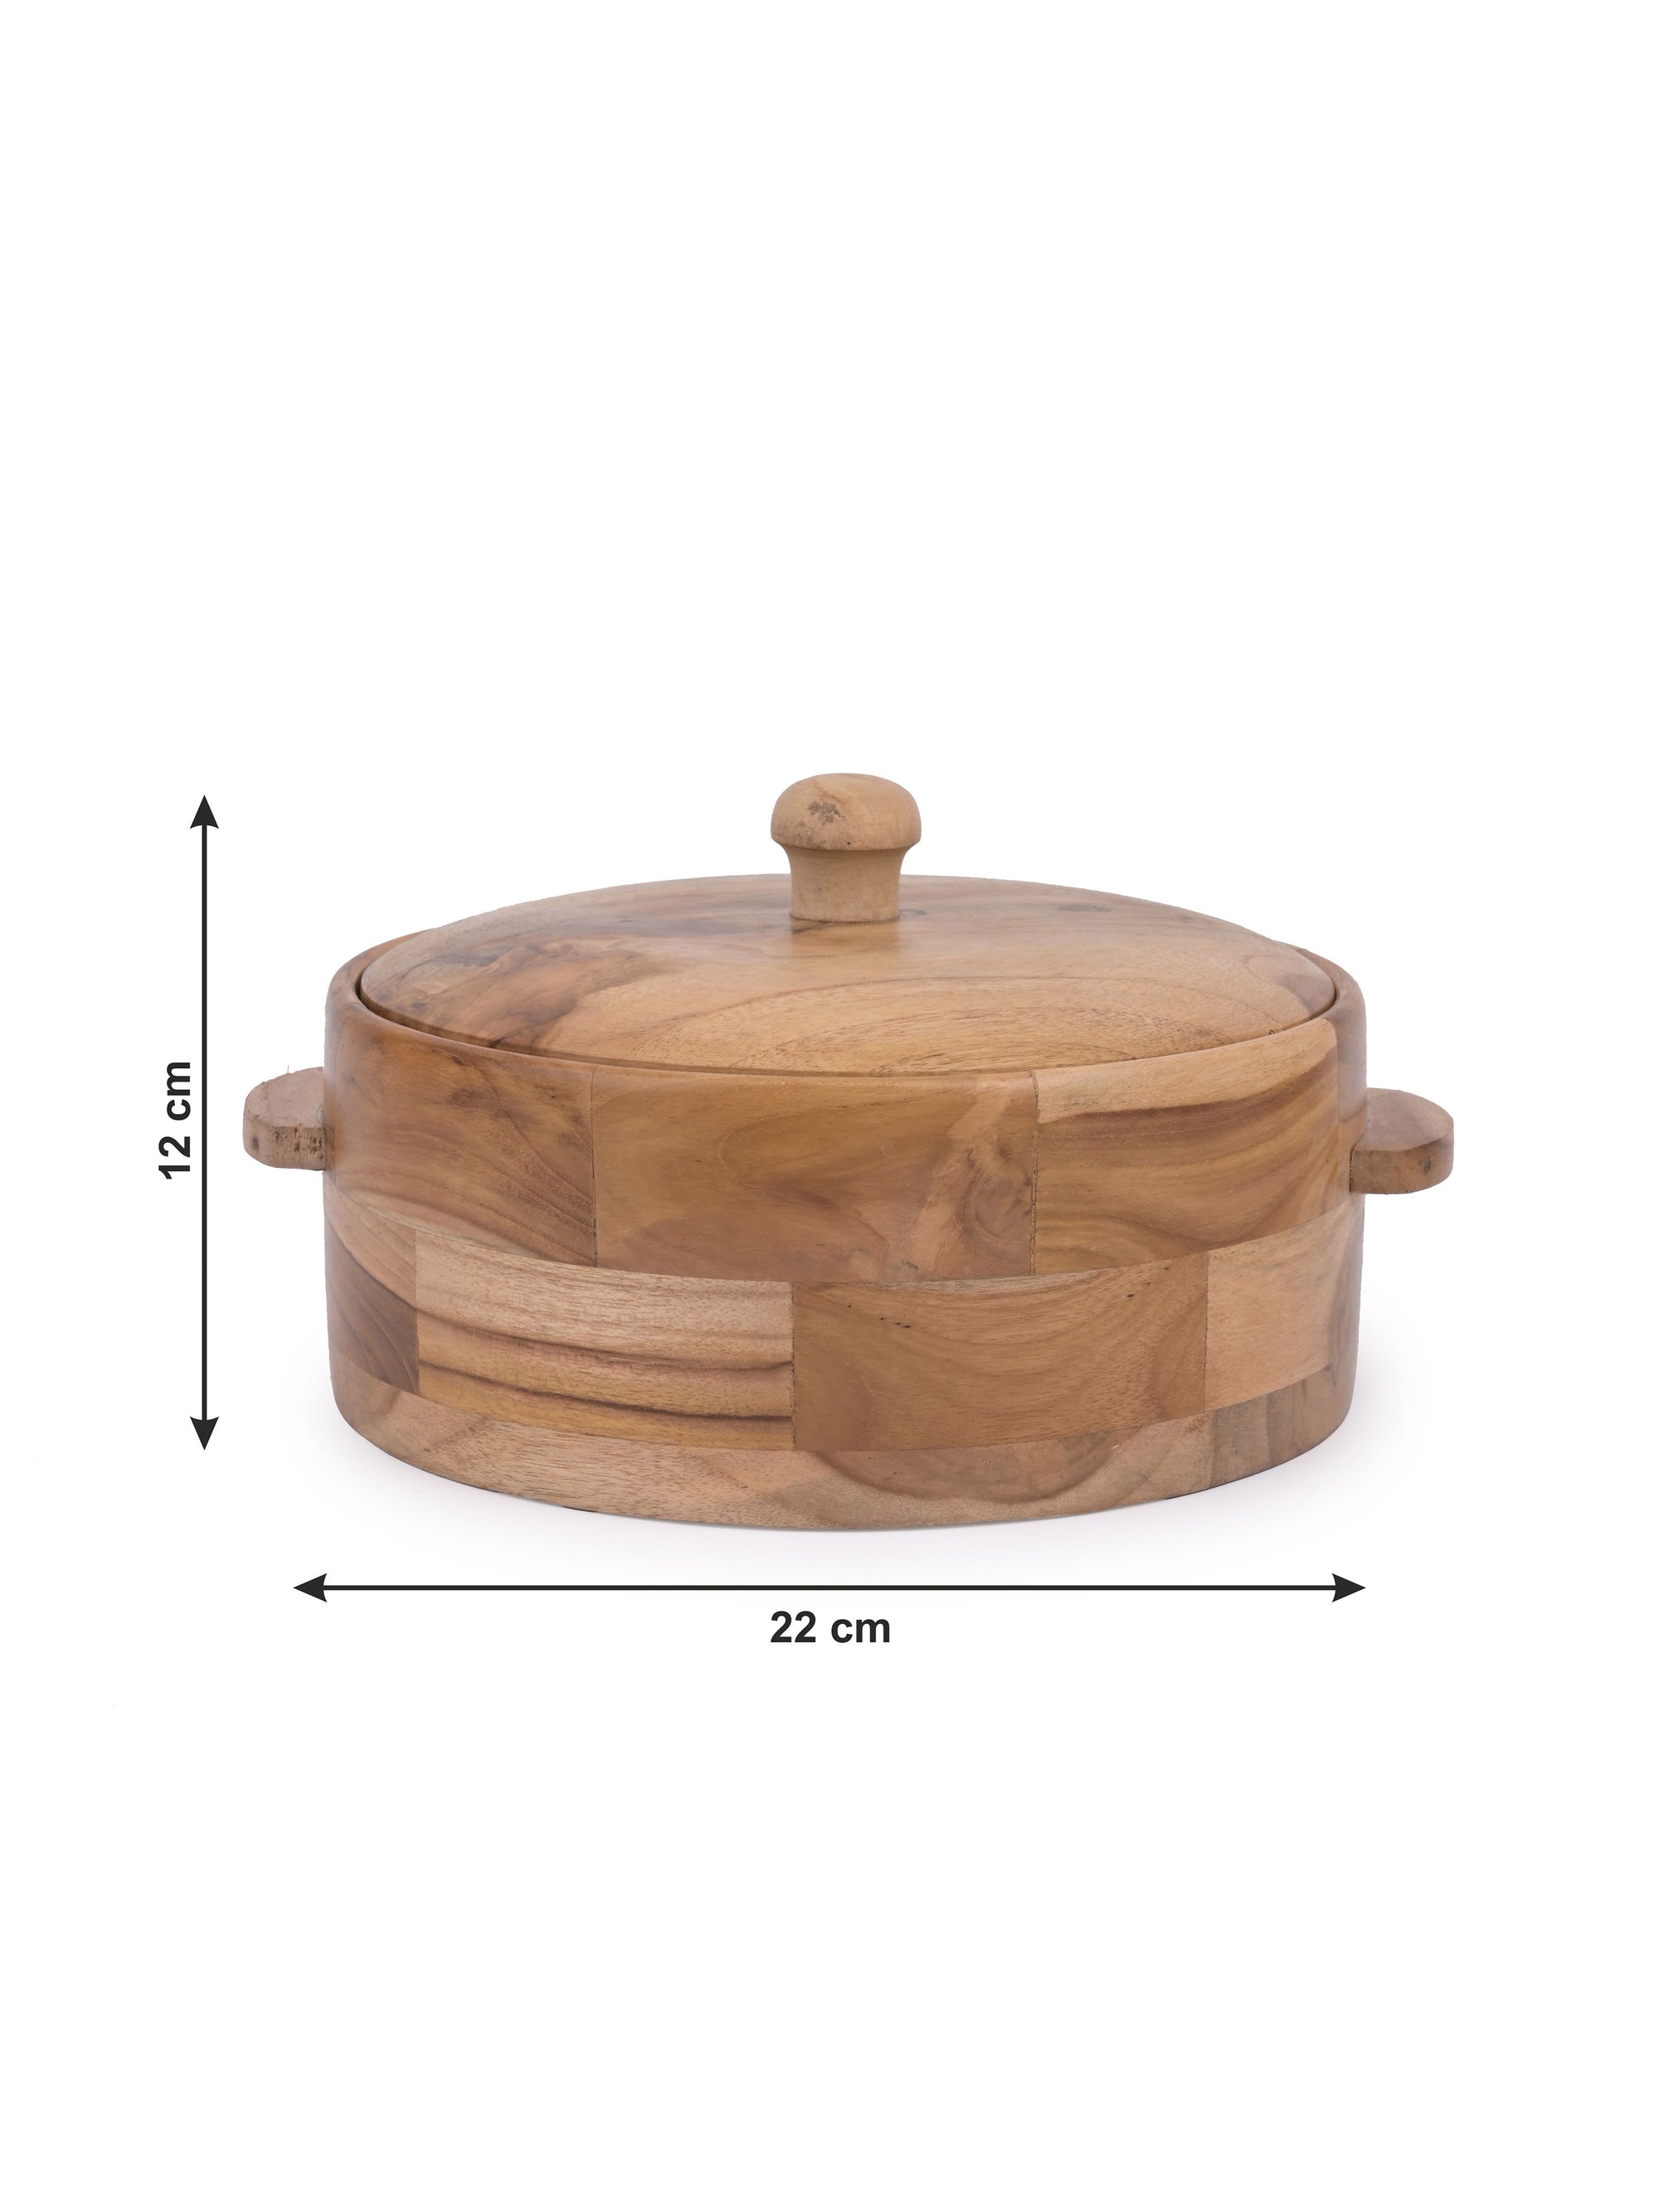 Teak wood carved stylish Chapati / Roti box - The Heritage Artifacts